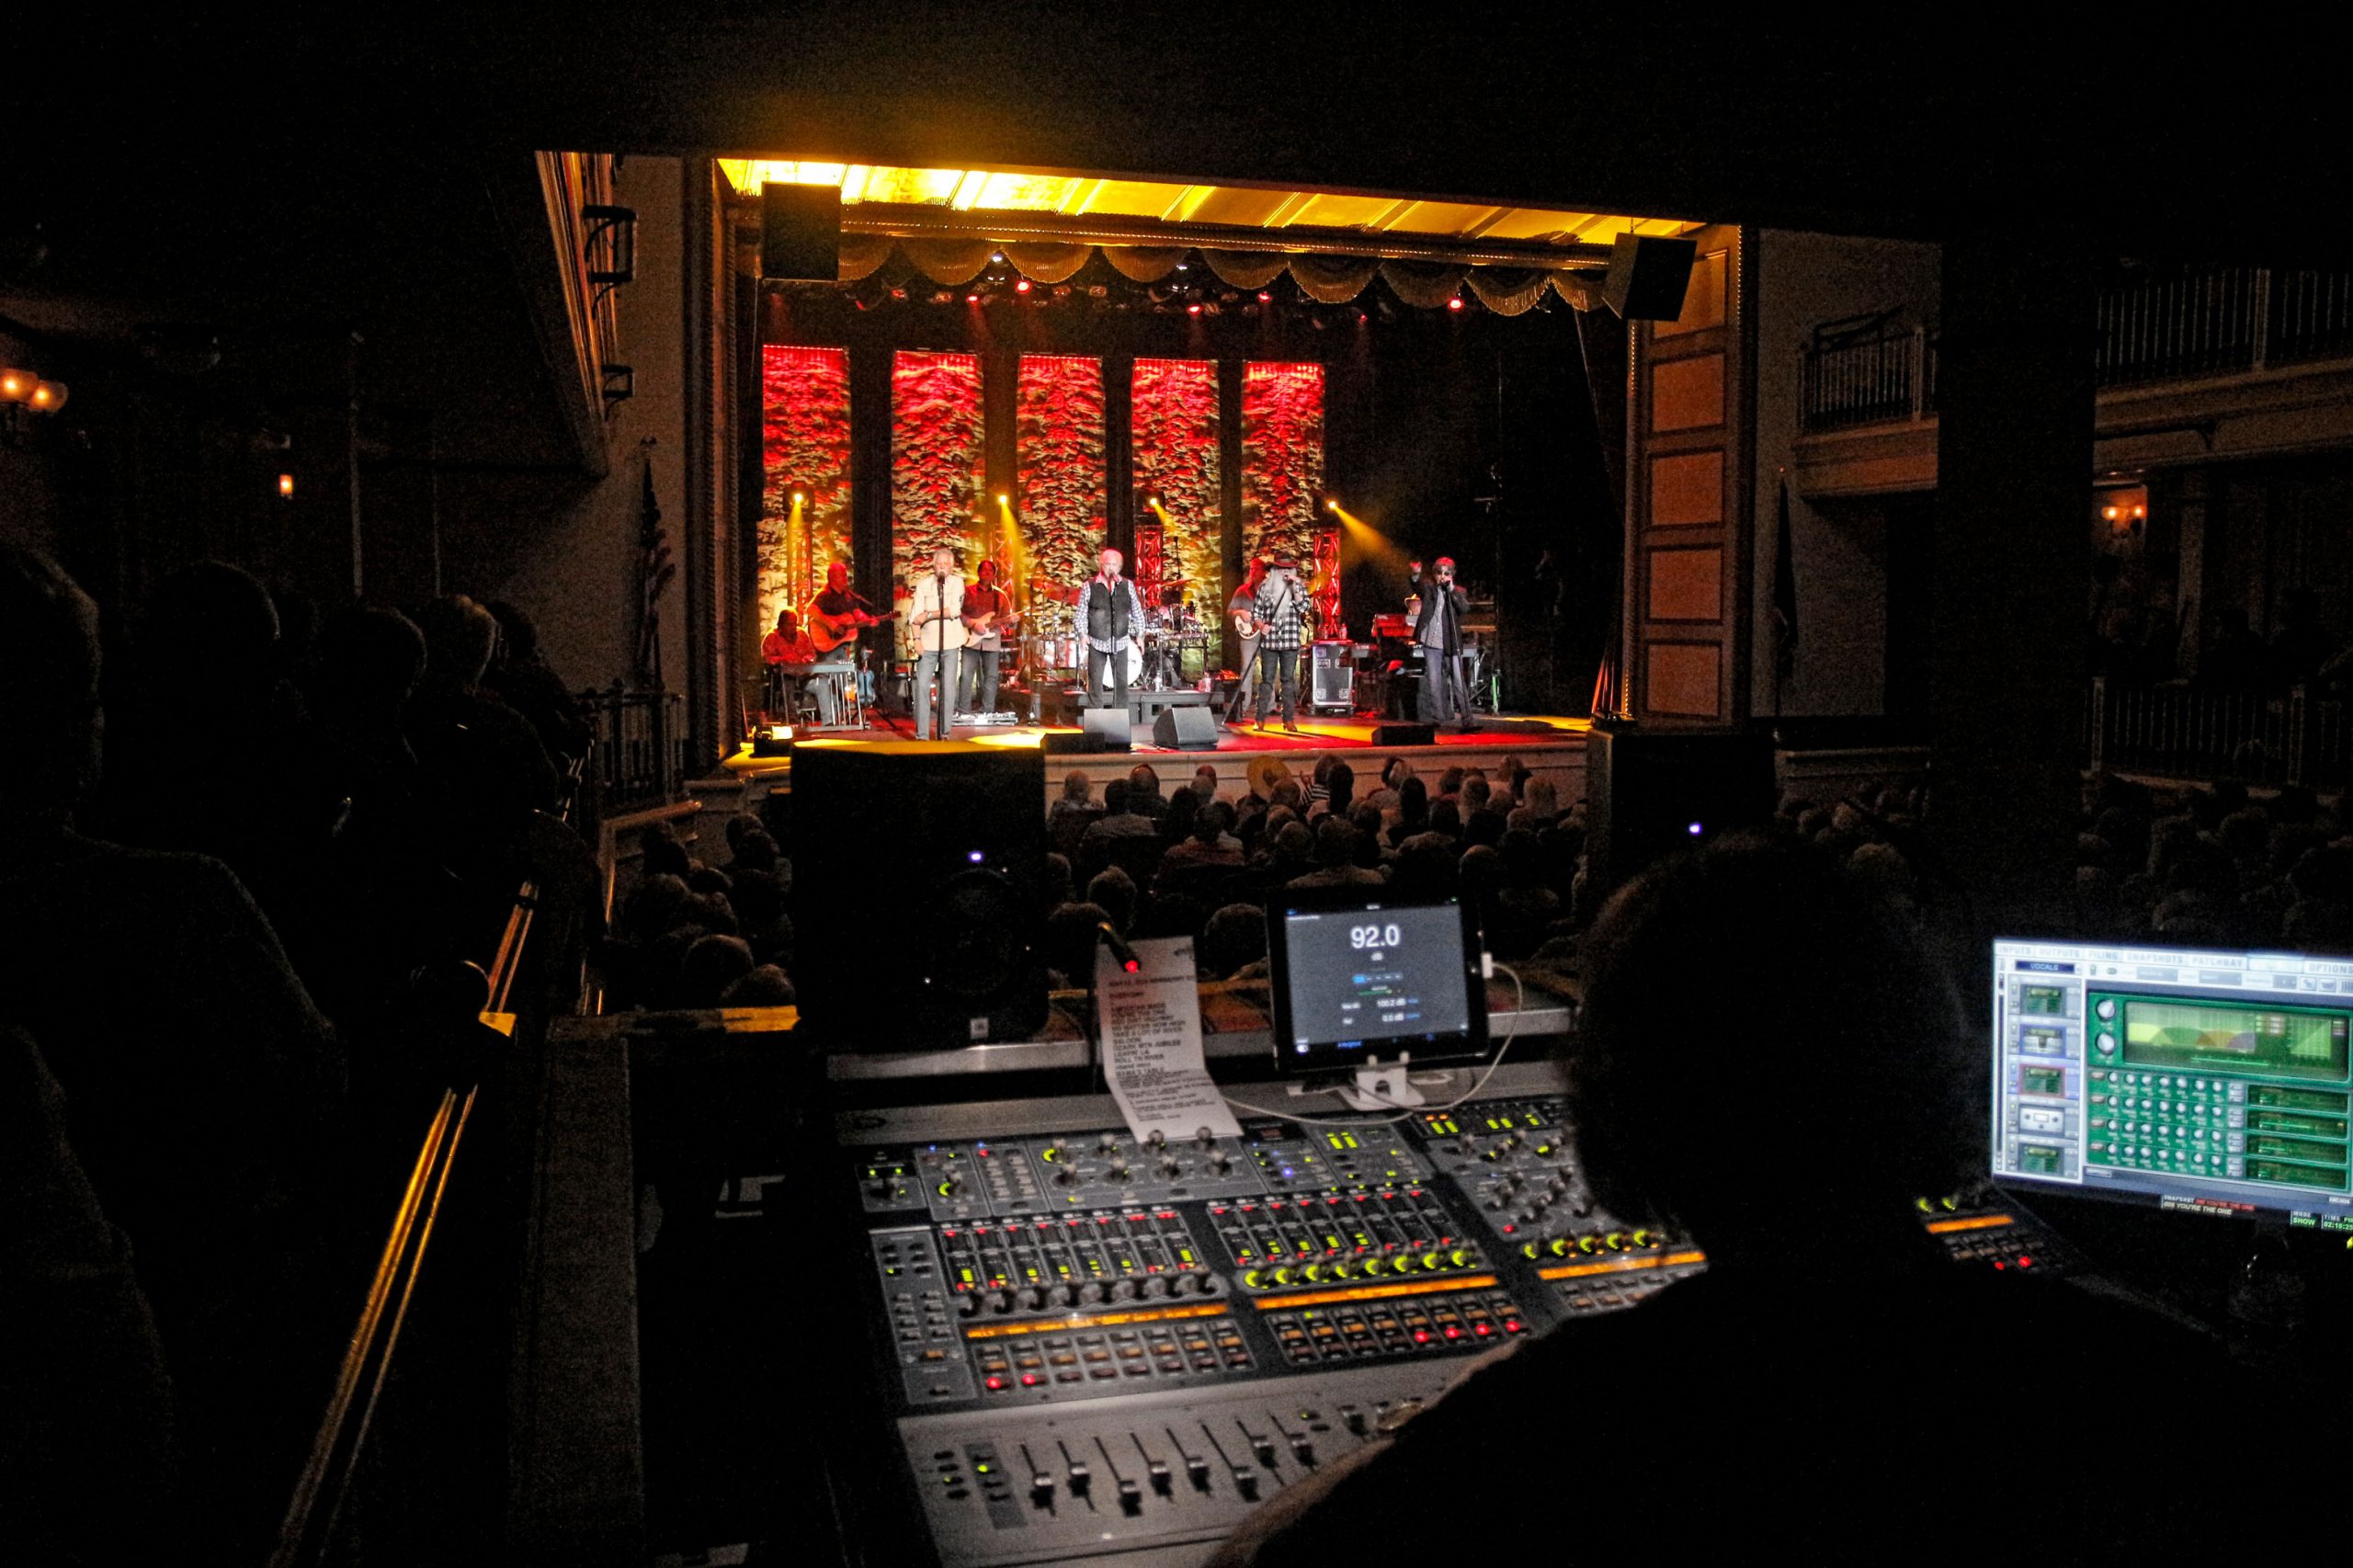 Oak Ridge Boys perform two shows at Newberry Opera House